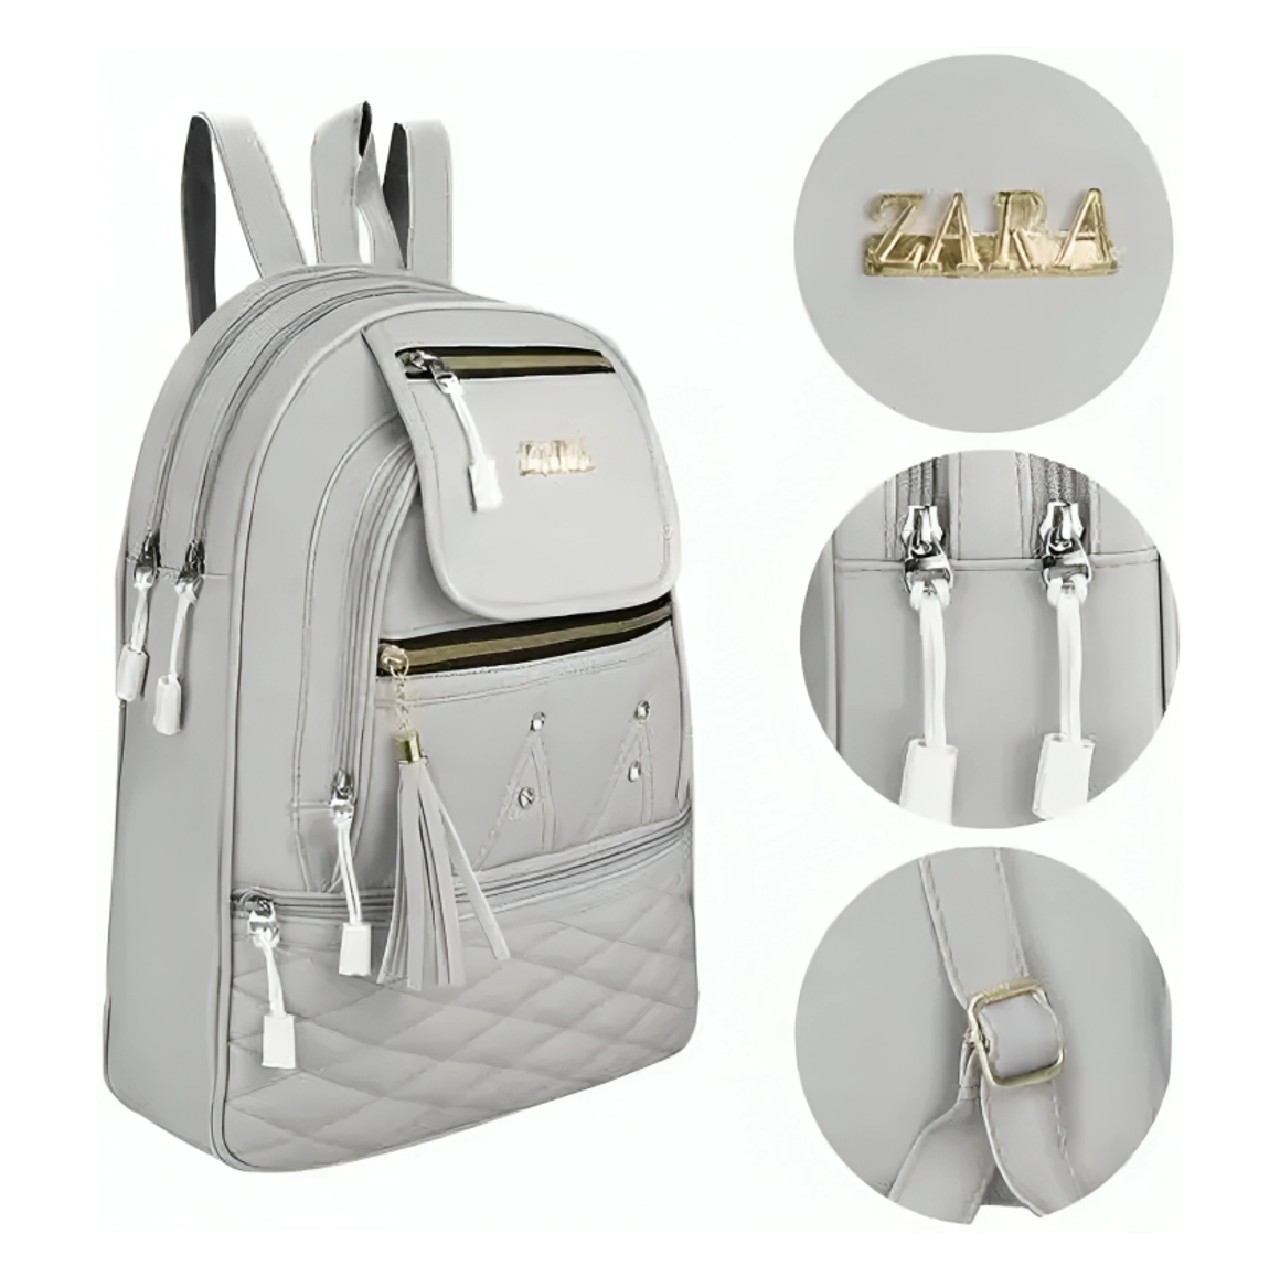 Premium-School-Bag-For-kids-